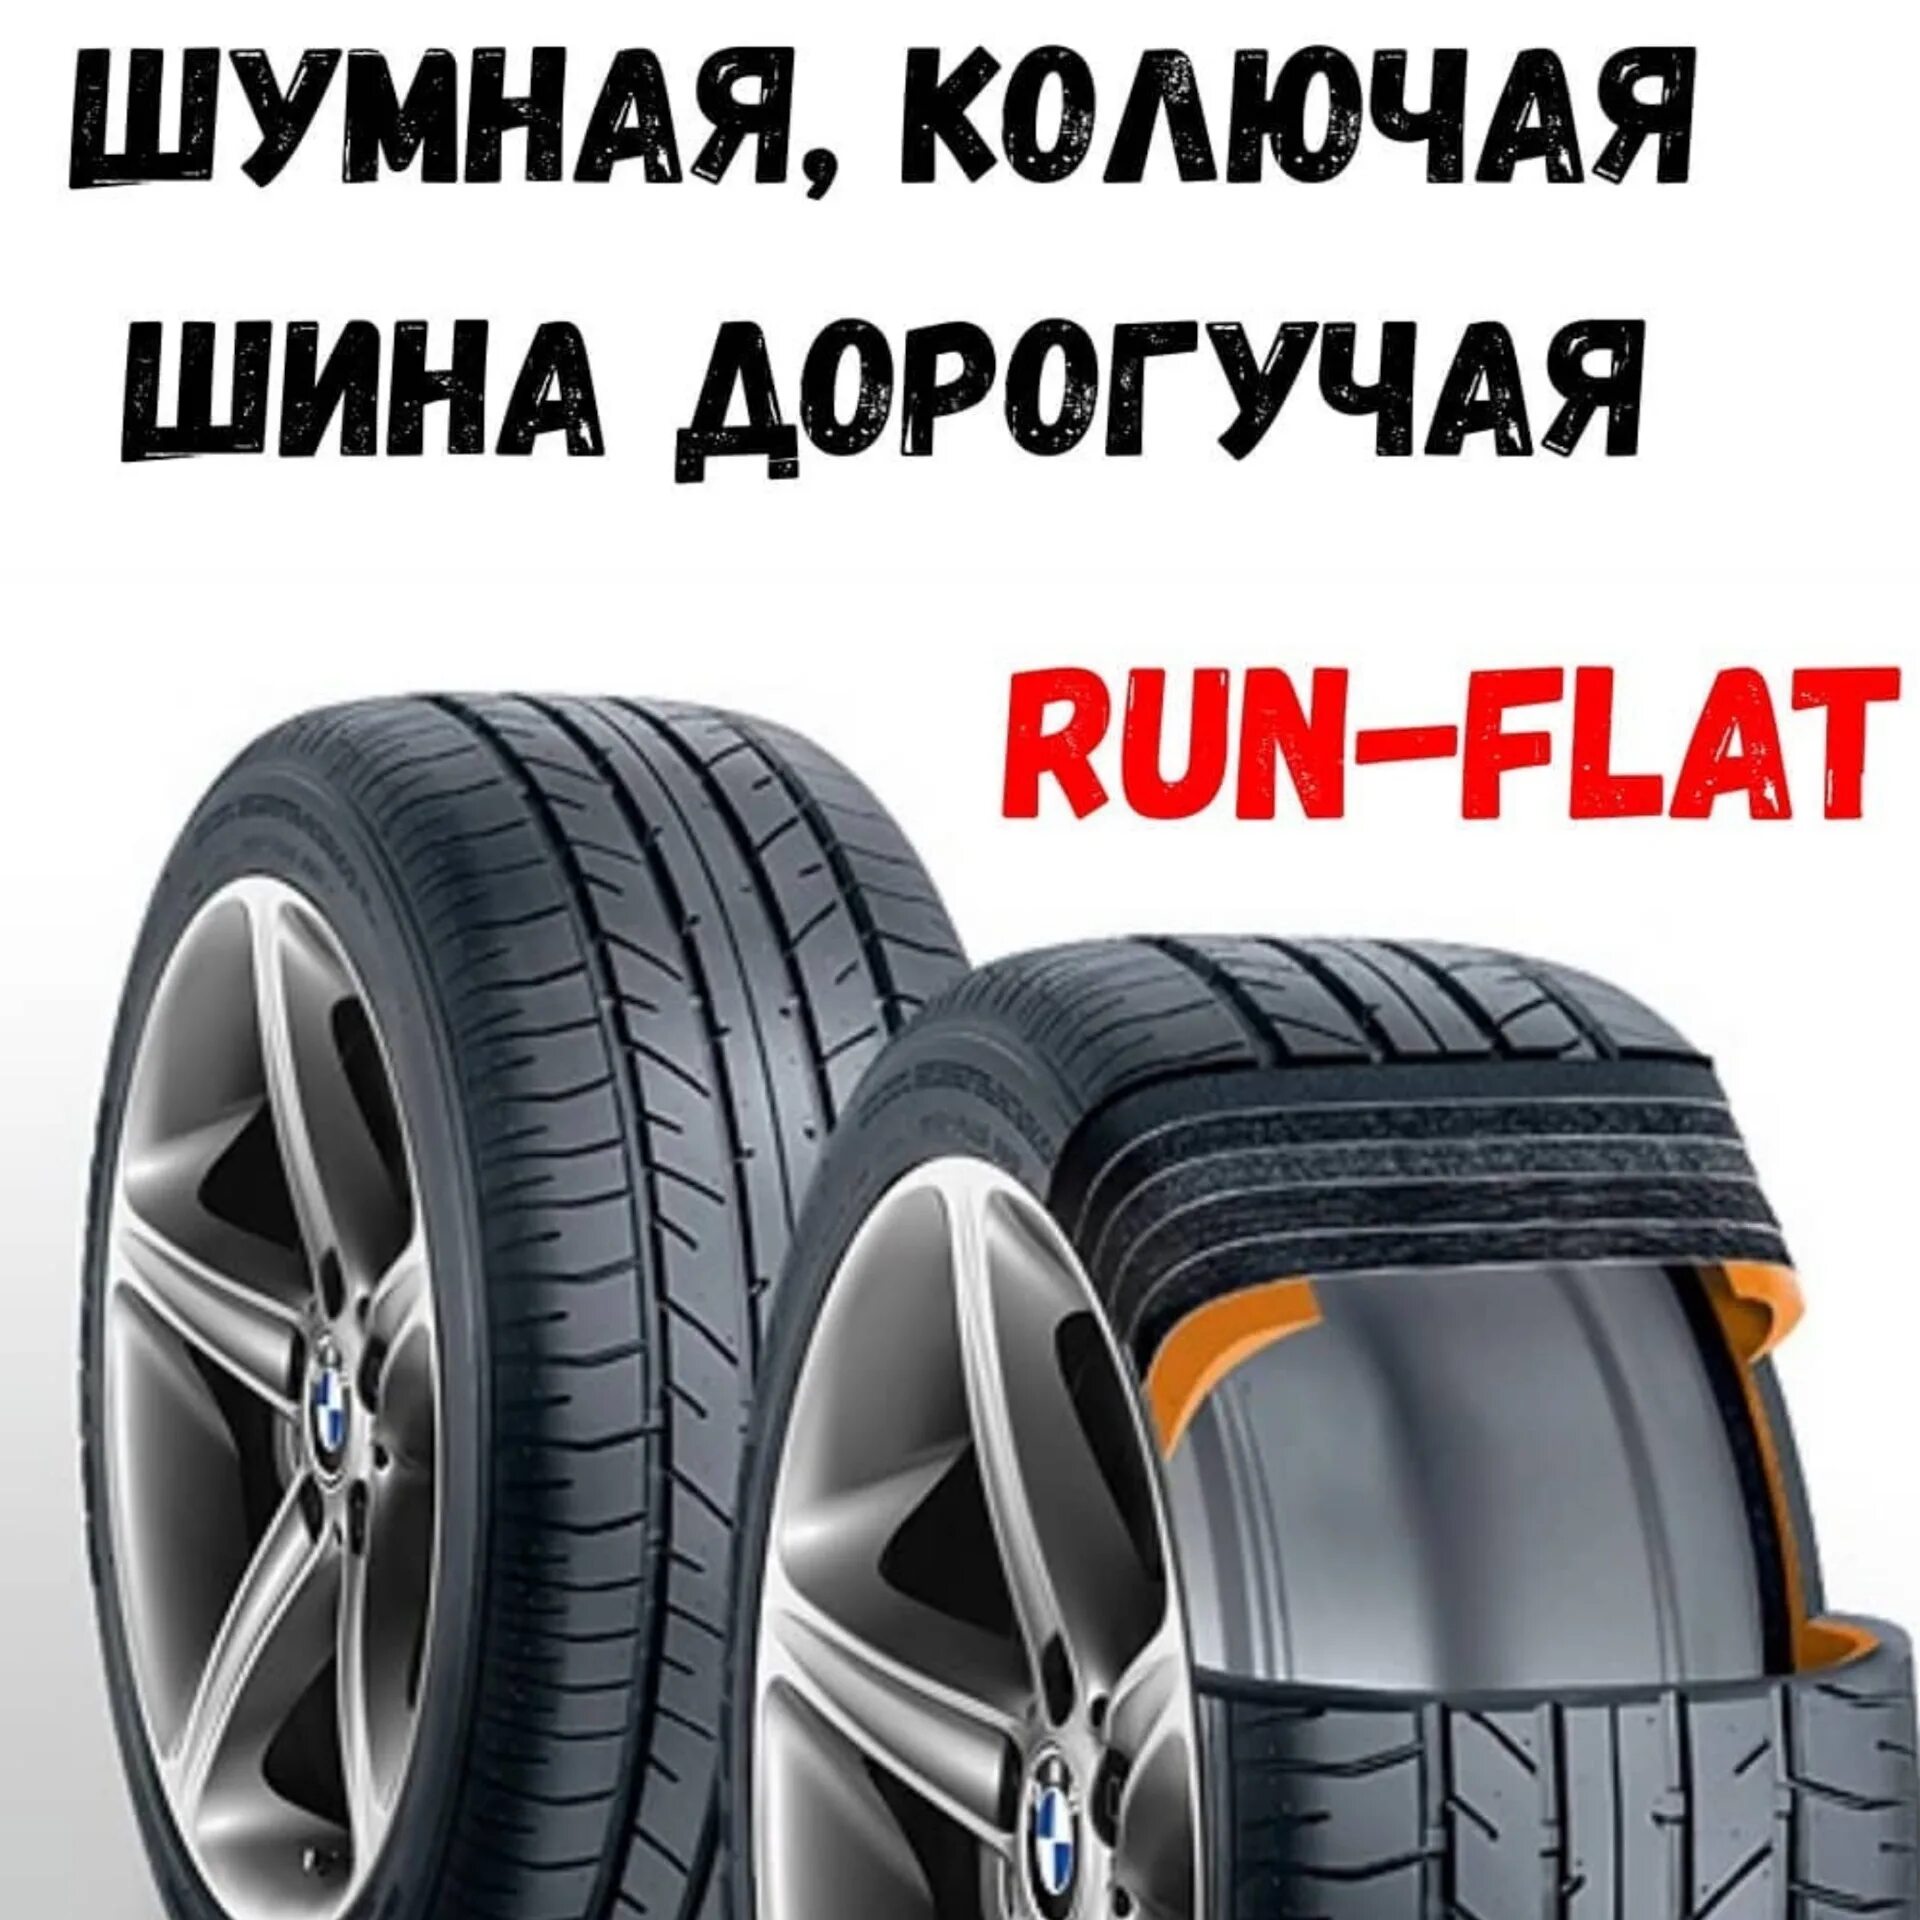 Runflat что это значит. Run Flat шины что это. RUNFLAT что это на шинах. RUNFLAT резина и колеса. Рун Флат что это на шинах.